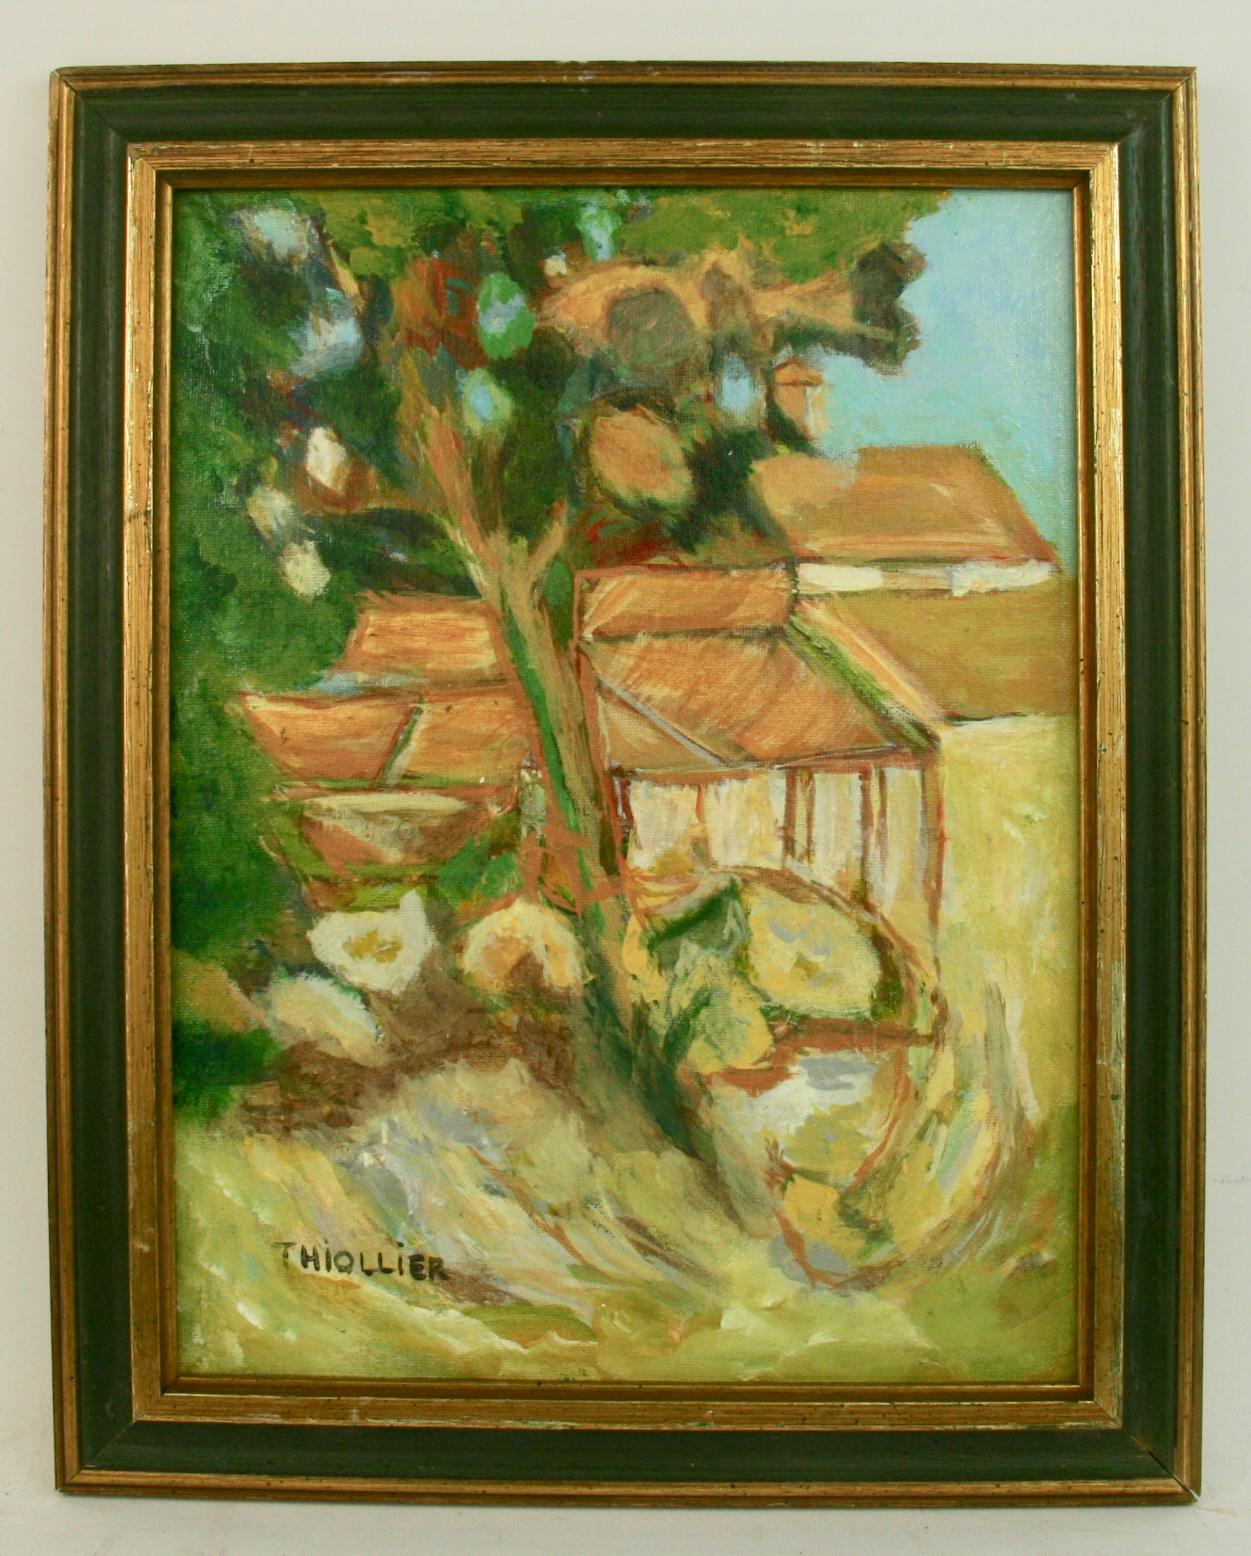 5-3548 Impressionist style landscape of a French village rooftops
Set in a vintage wood frame
Image size 11.5x8.75